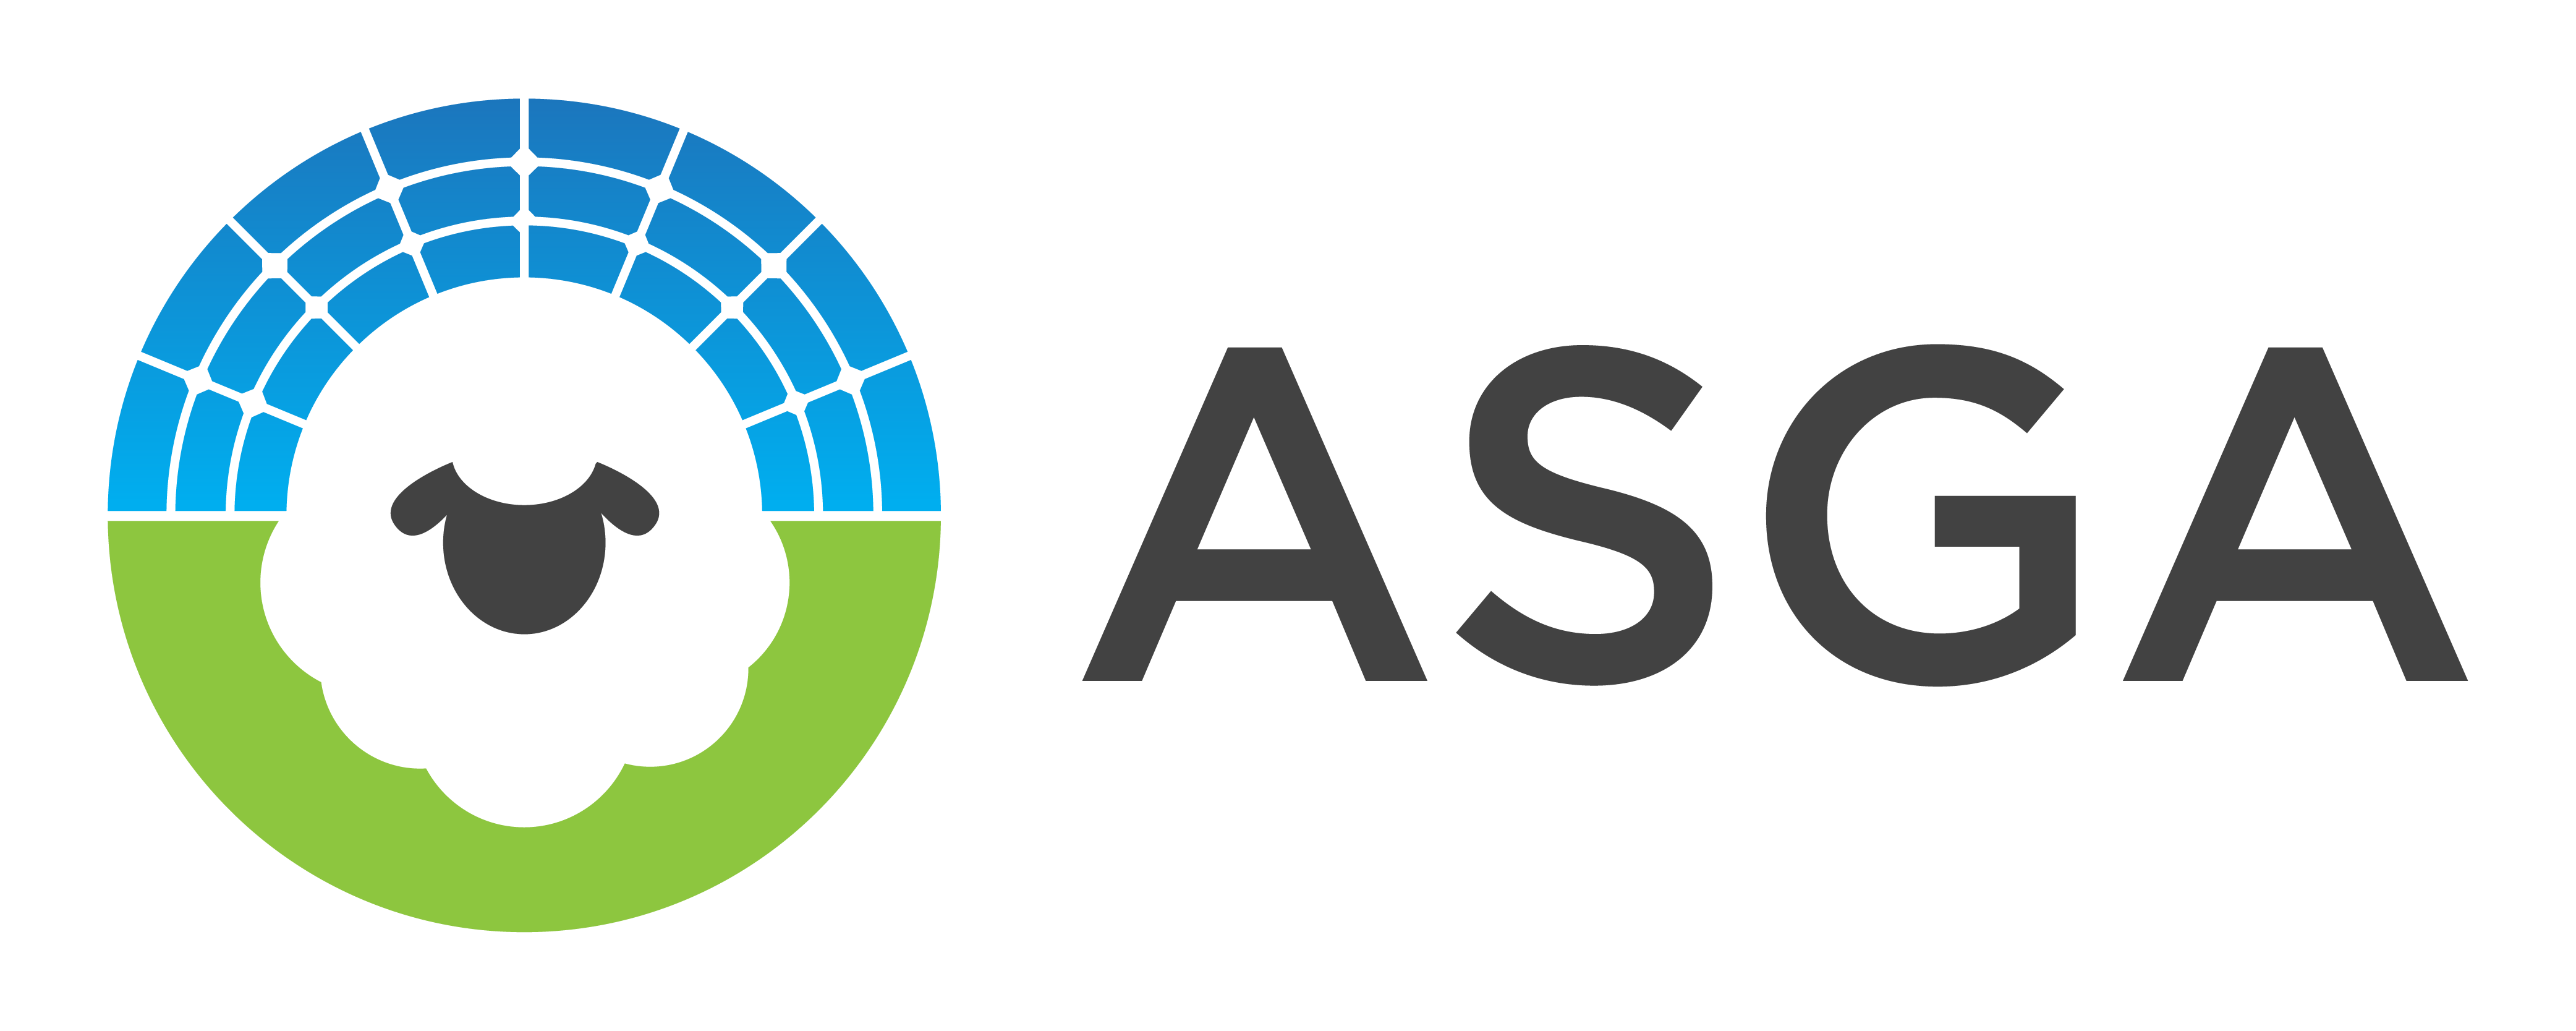 American Solar Grazing Association logo